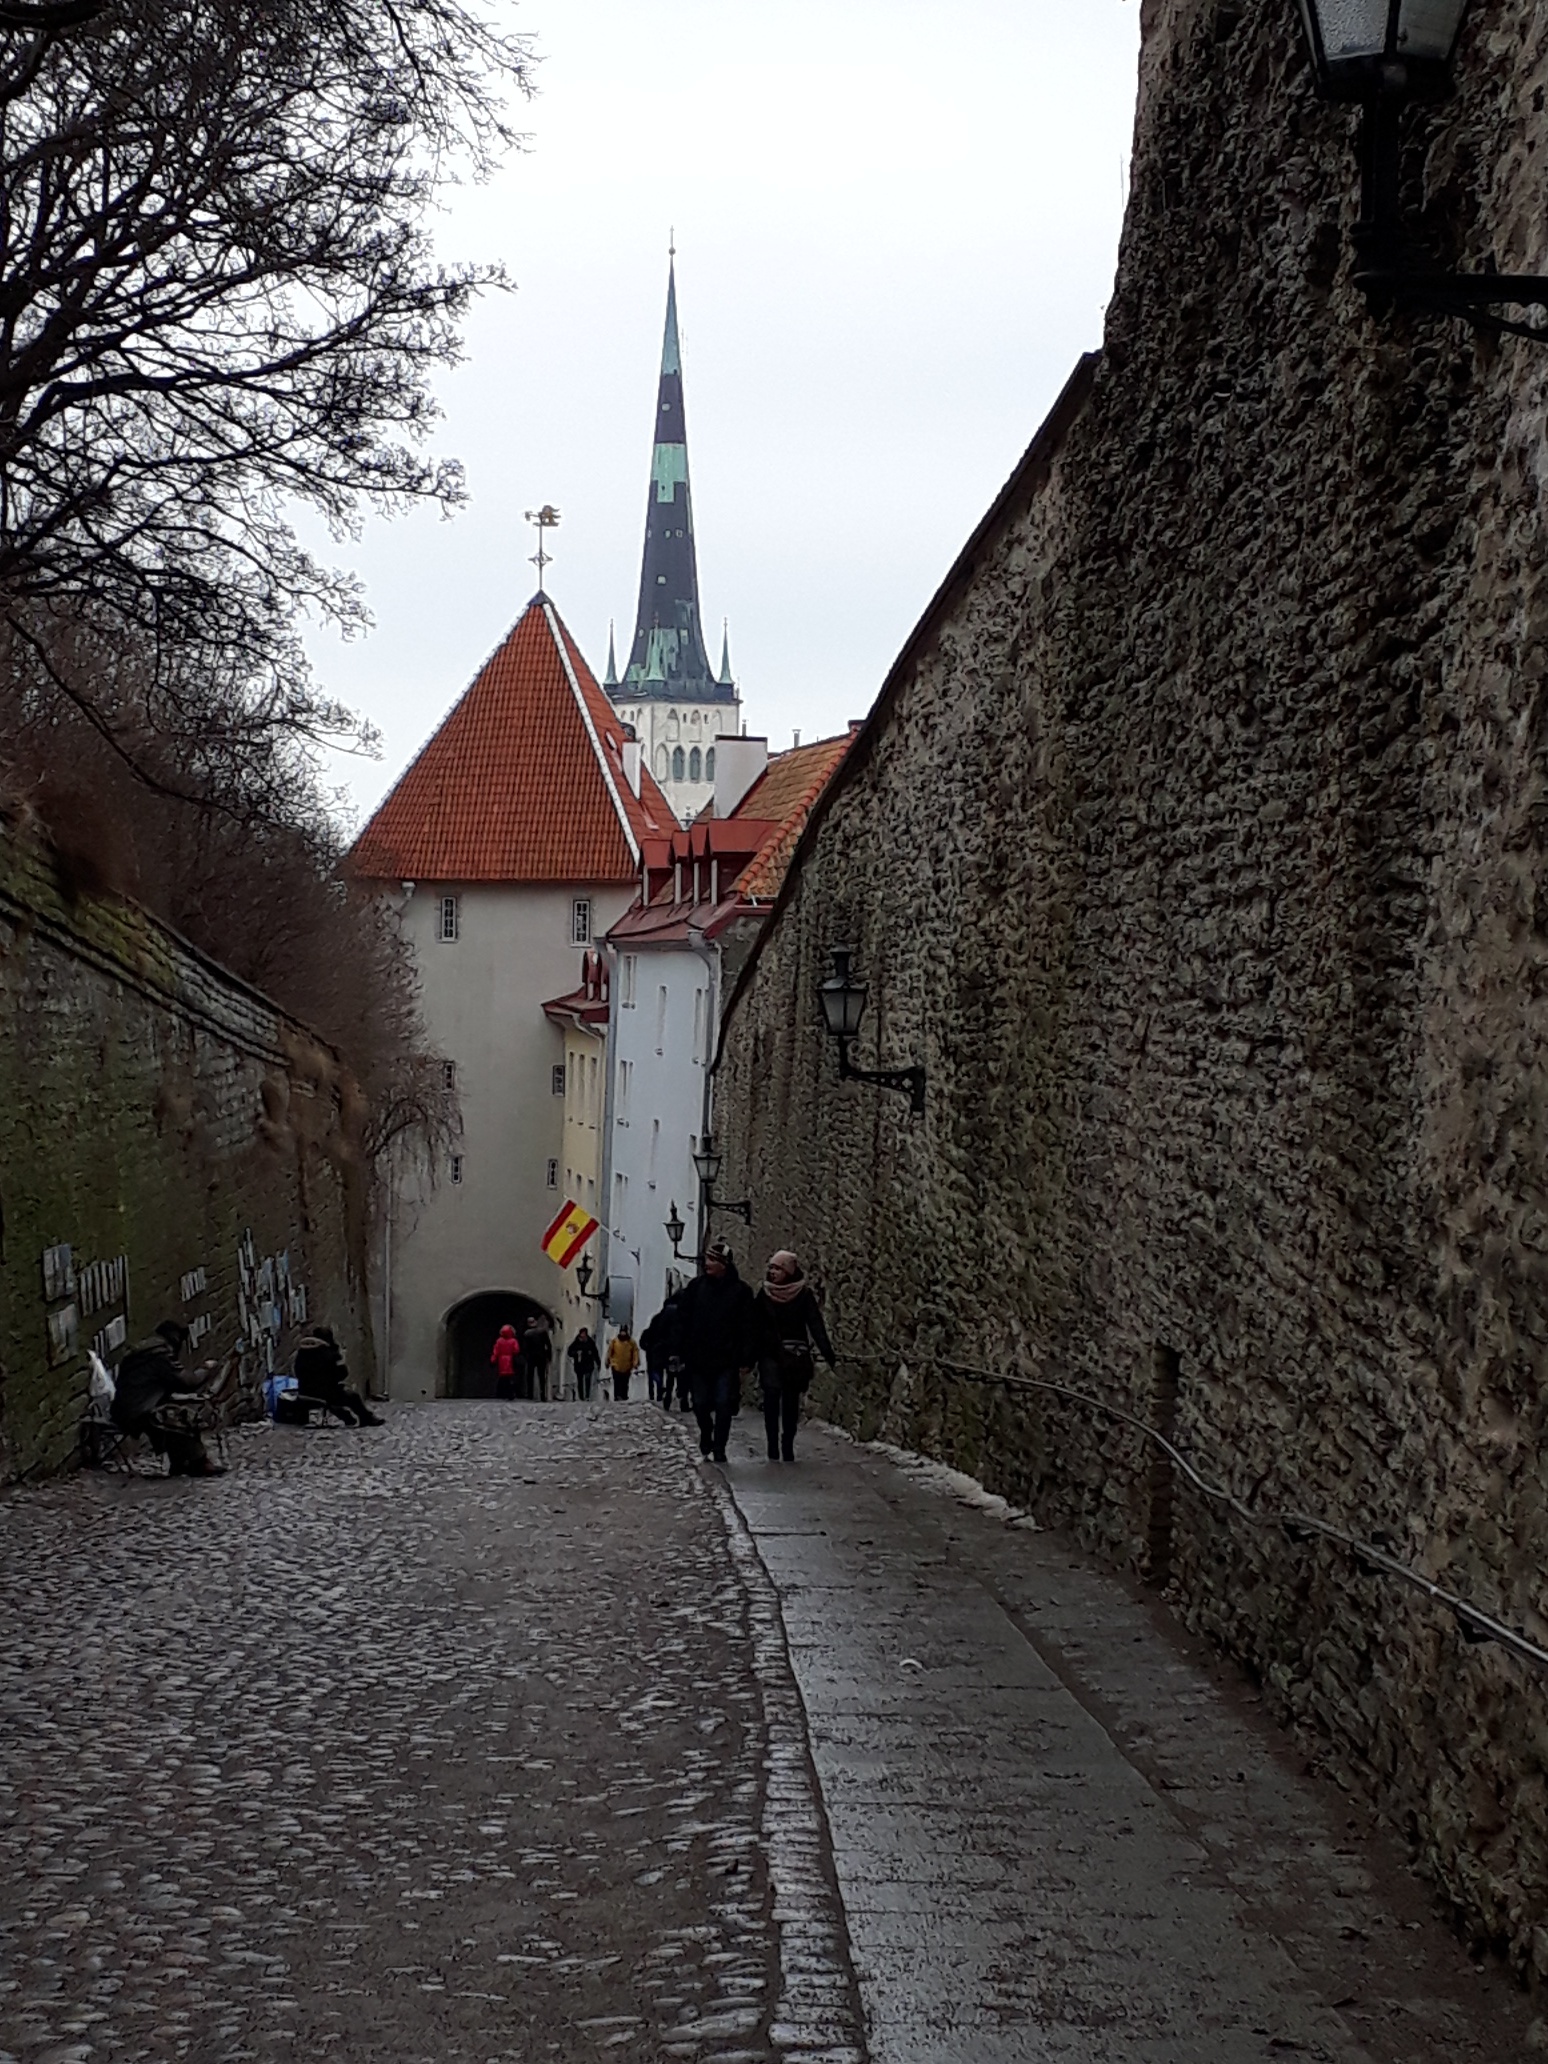 Postcard. K. Burman. Tallinn. Long leg. rephoto